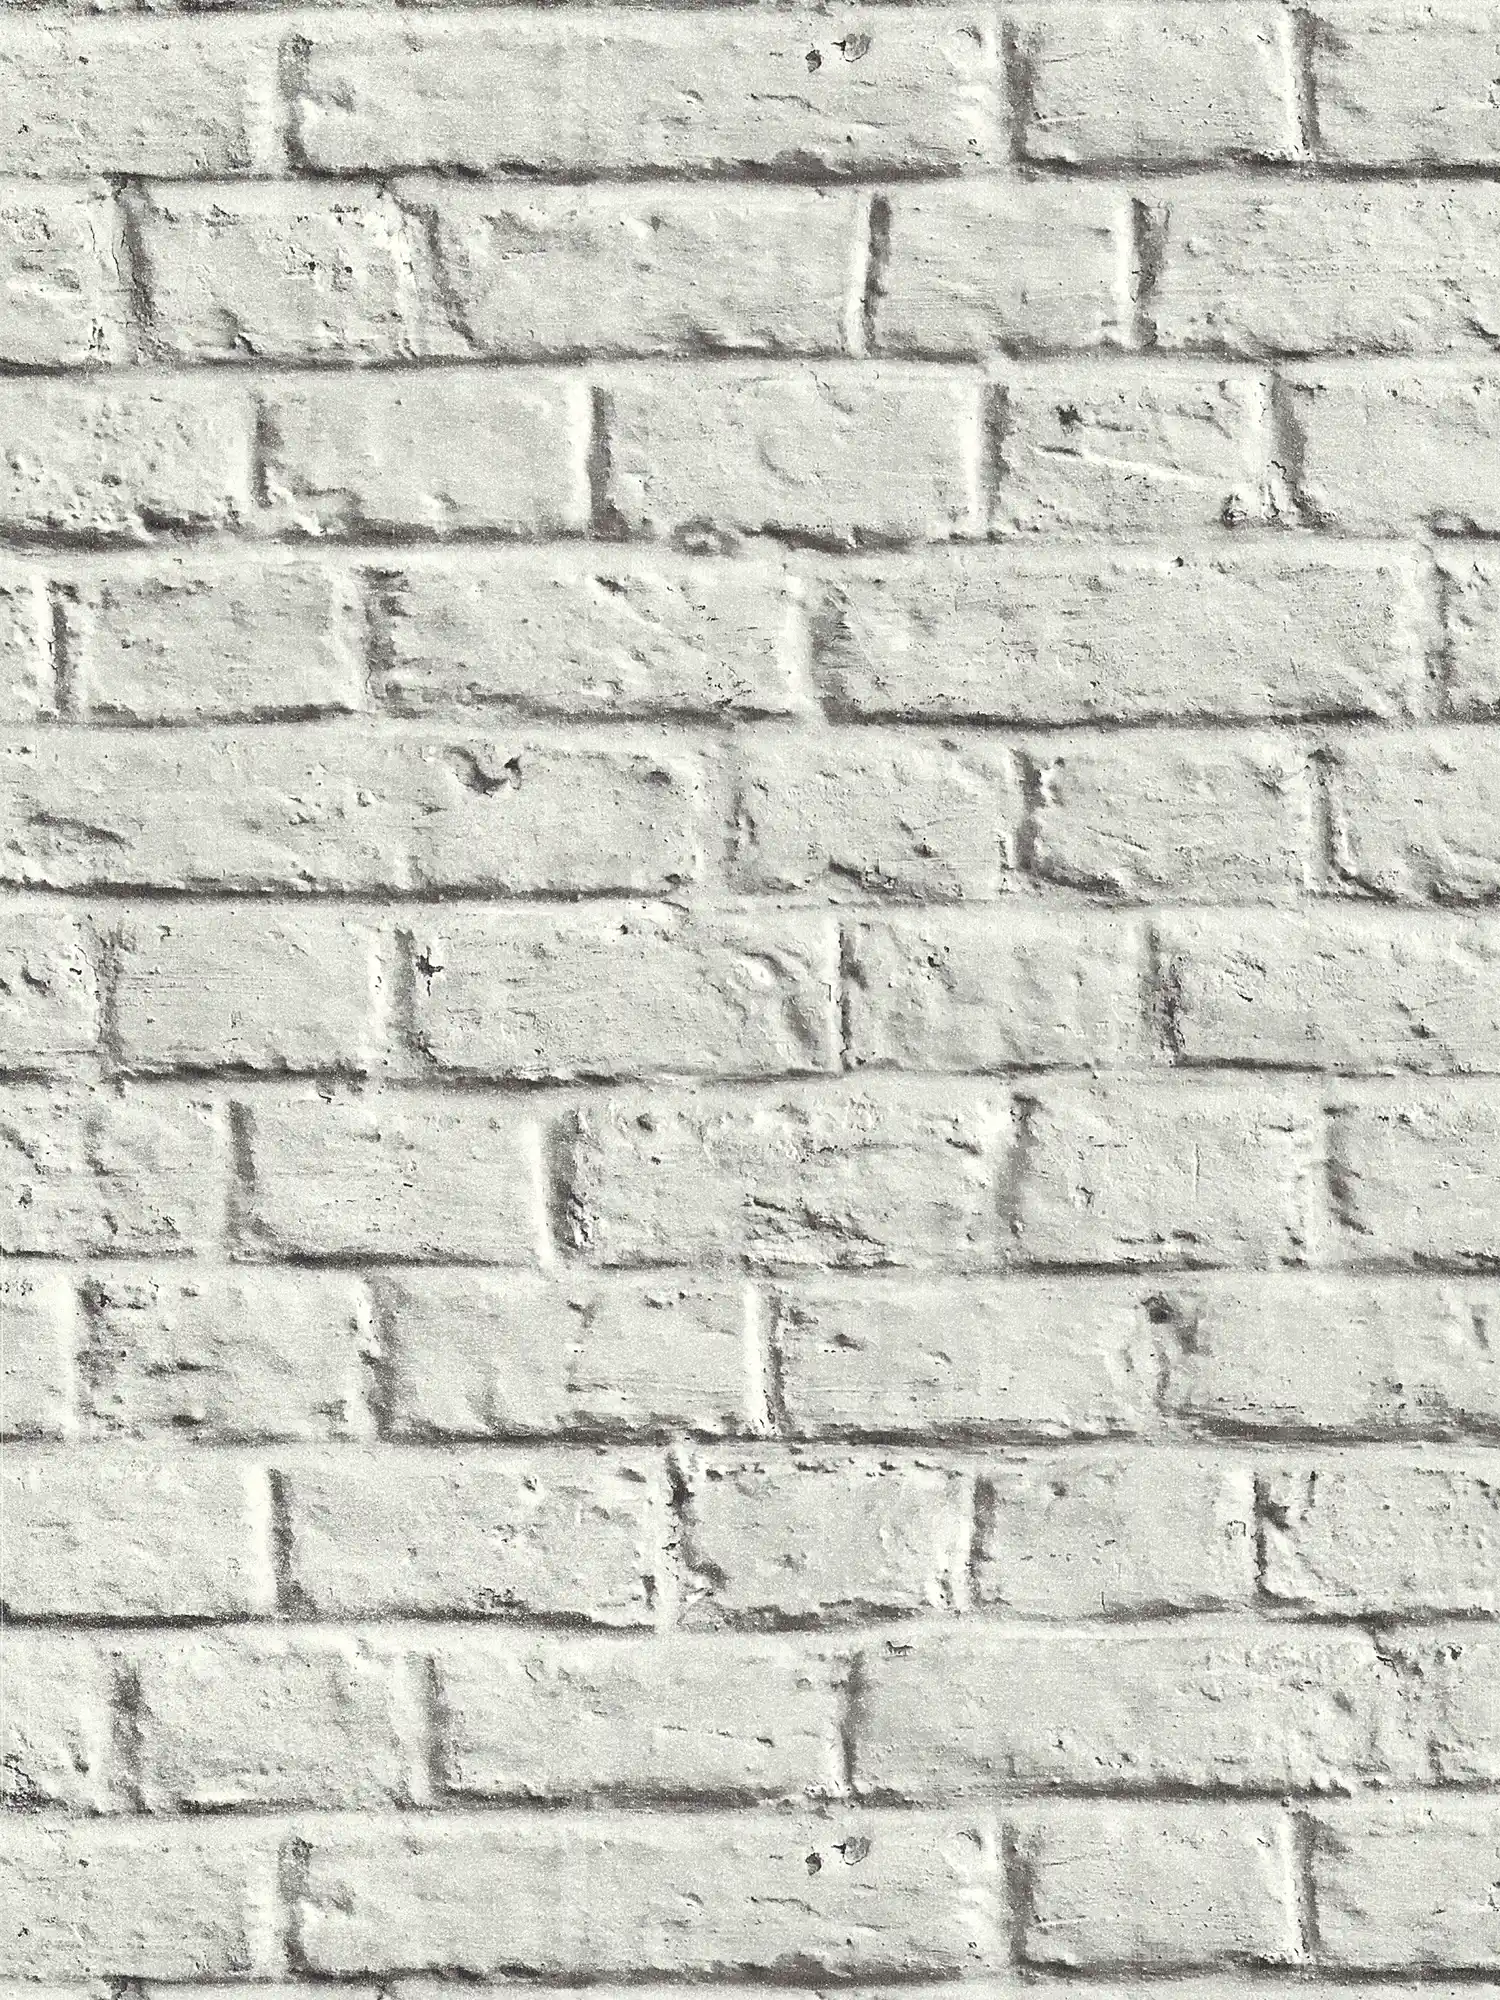             Stone wallpaper smooth brick look - grey, white
        